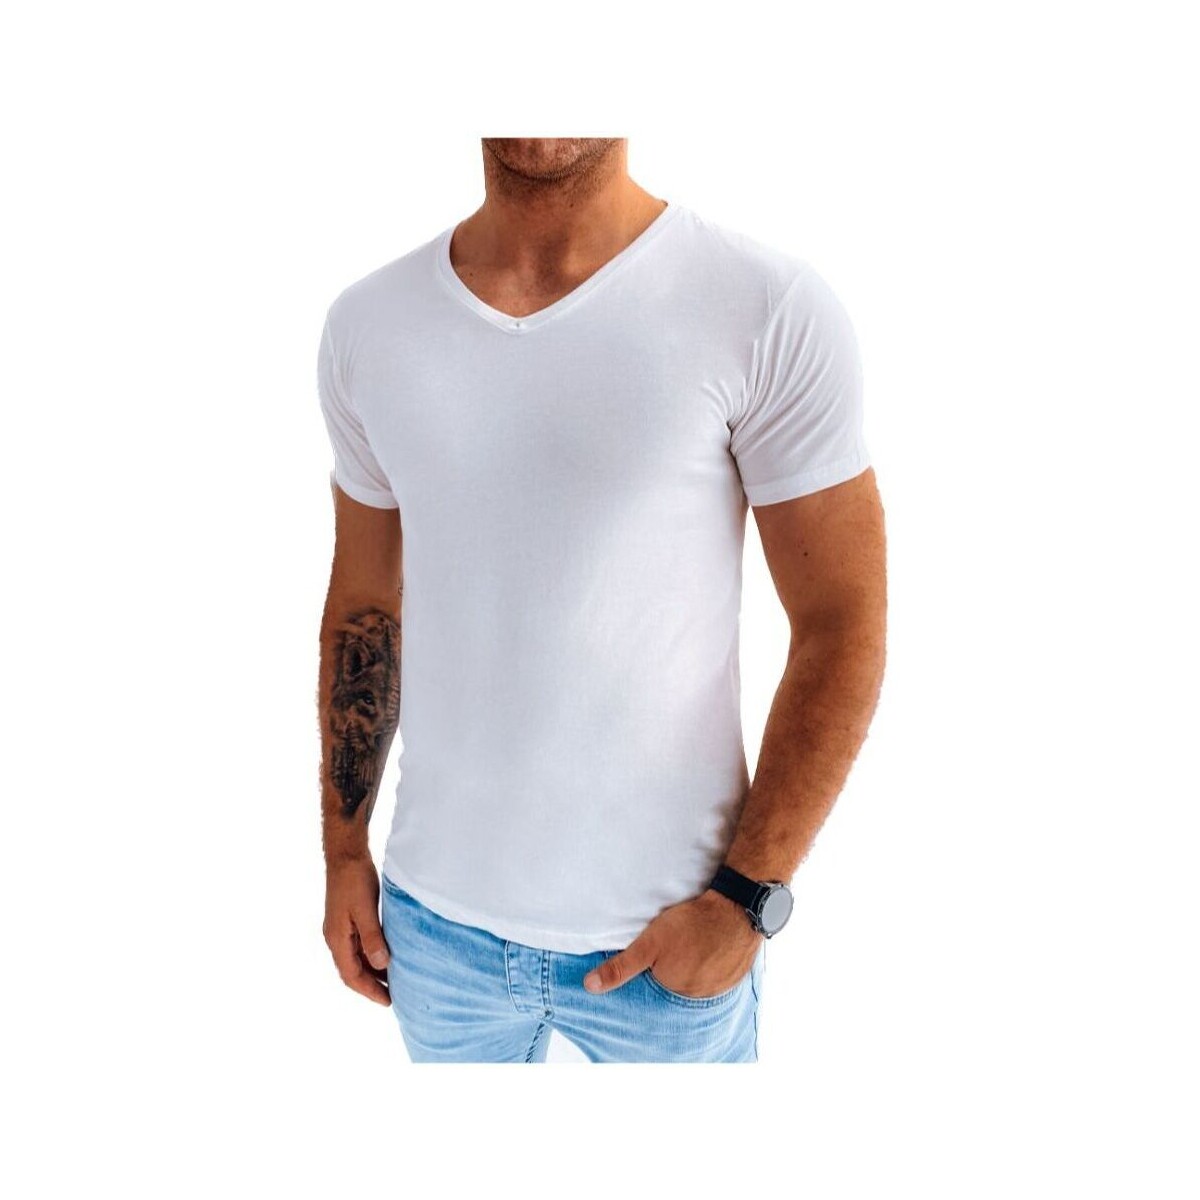 Textil Muži Trička s krátkým rukávem D Street Pánské tričko s krátkým rukávem Tomnin ecru Bílá